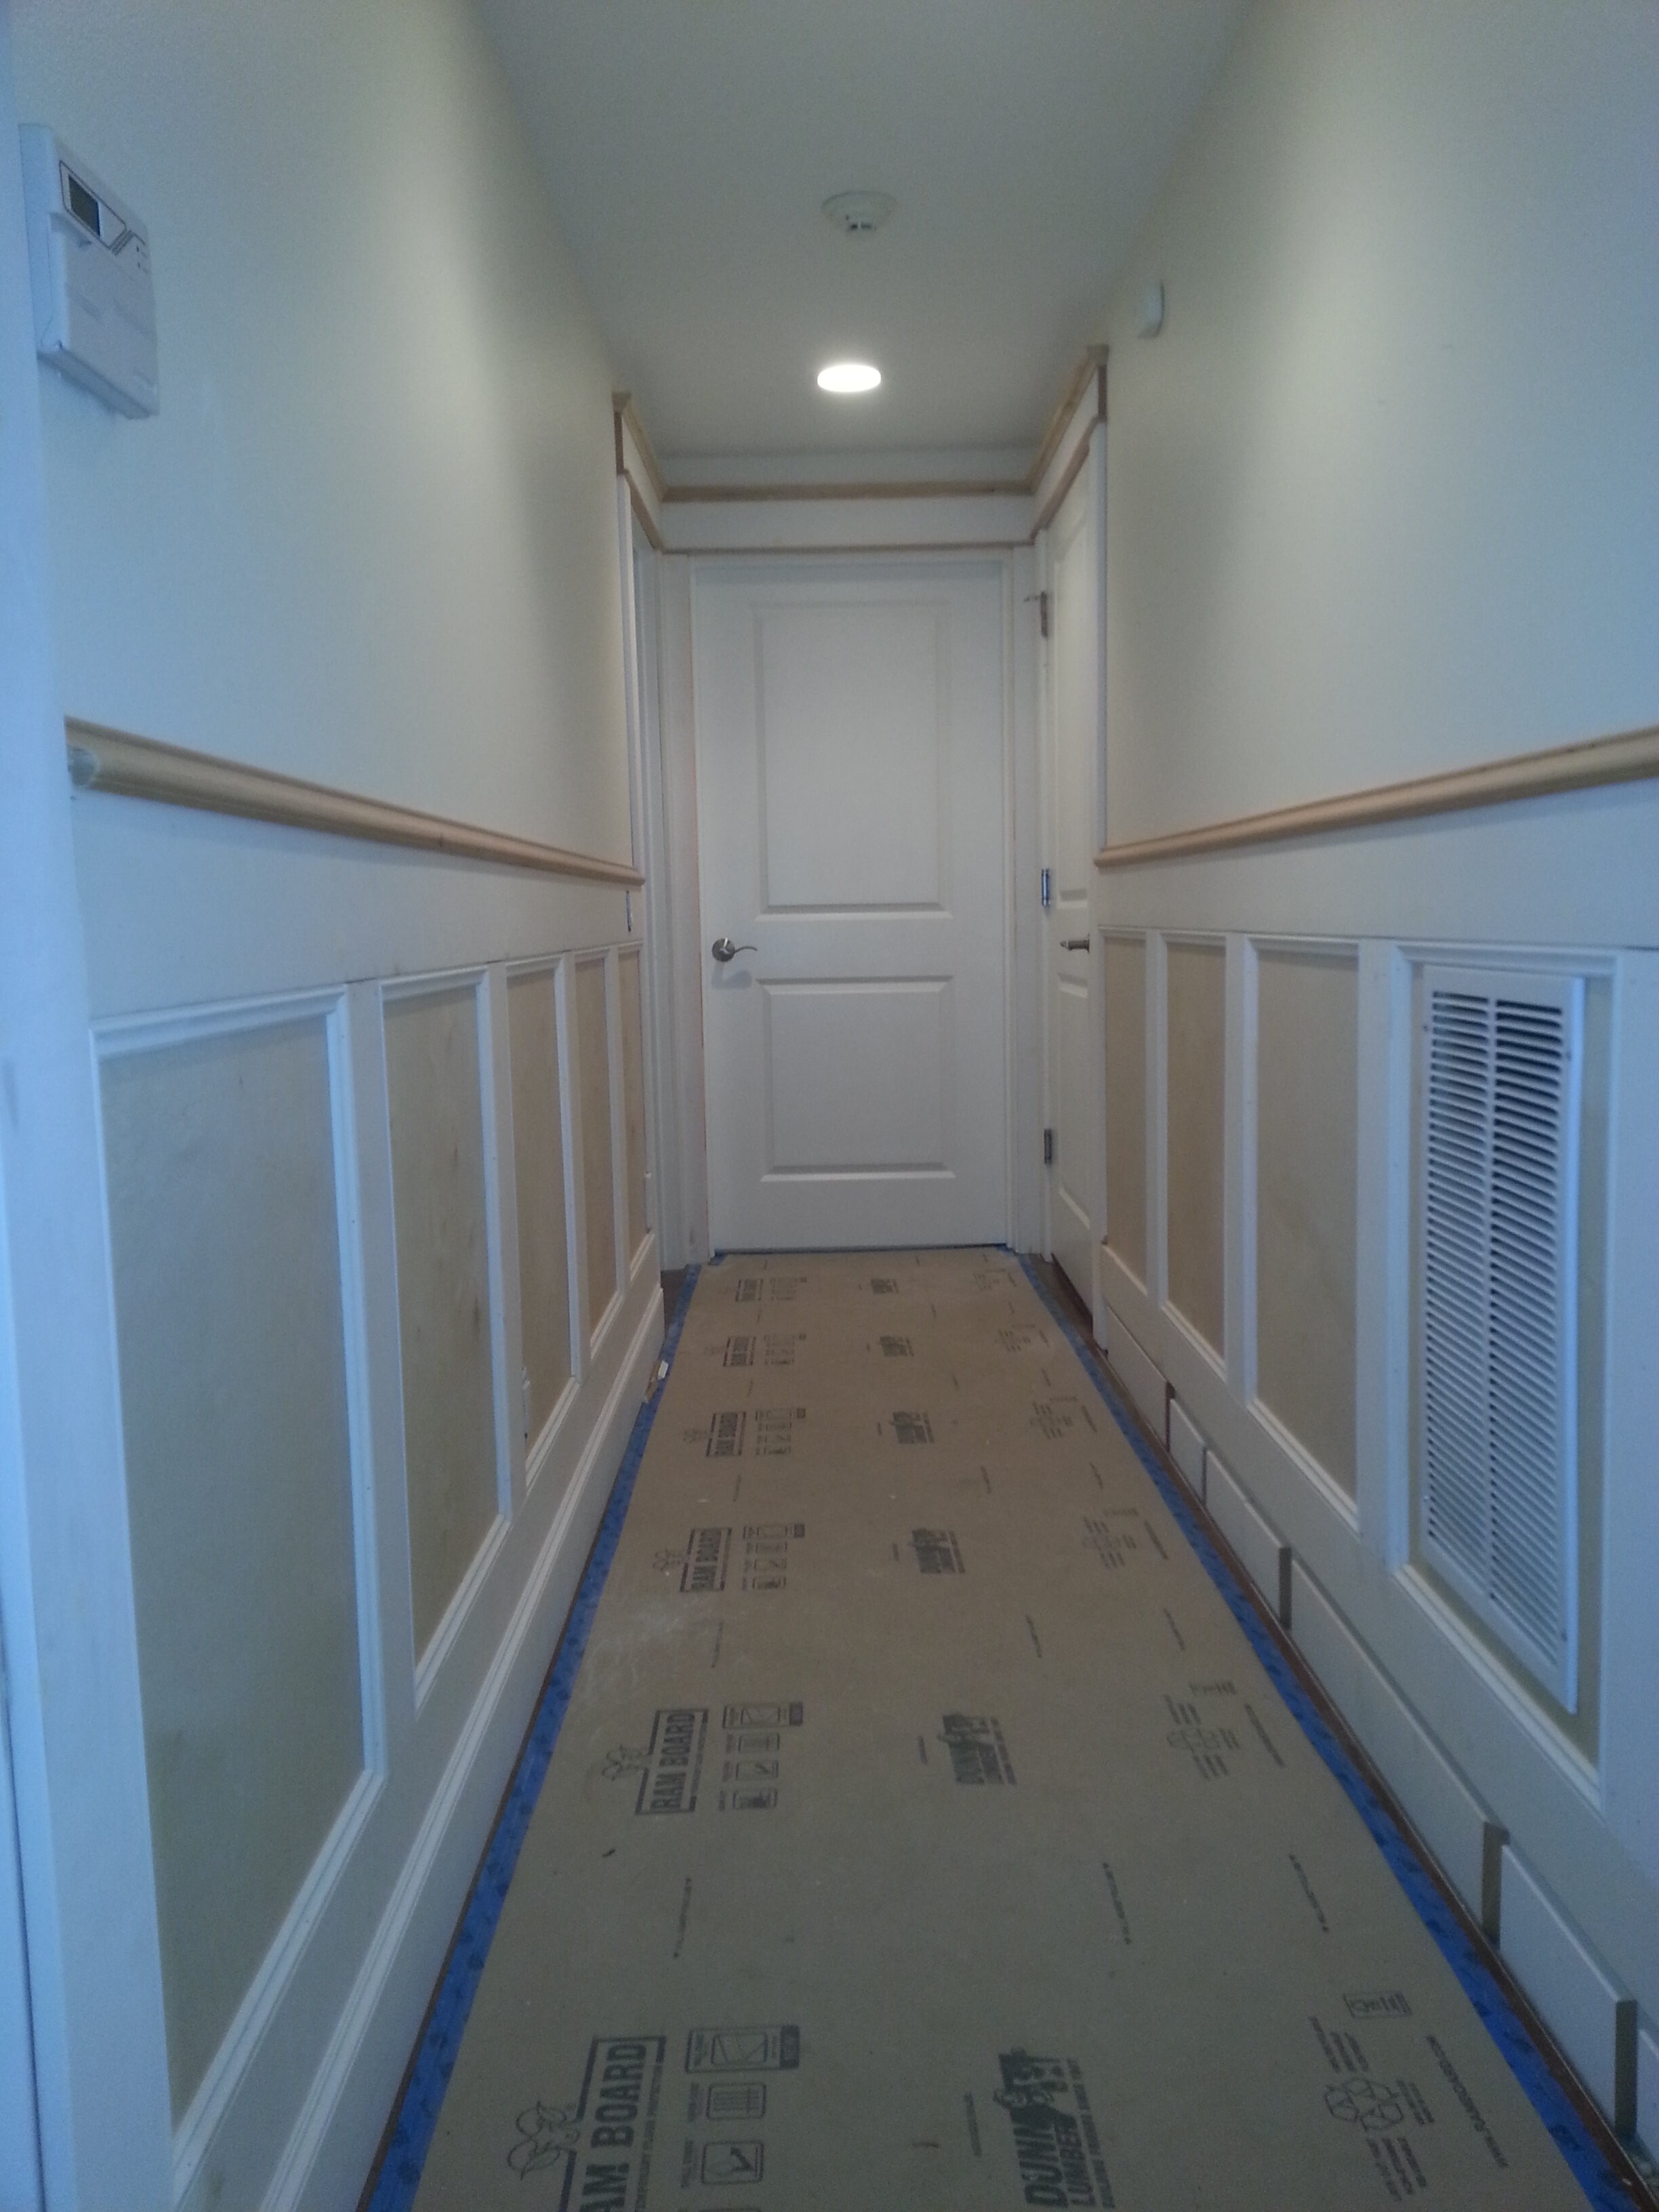 2 - Interior Carpentry Service - Wainscot Paneling Installation.jpg